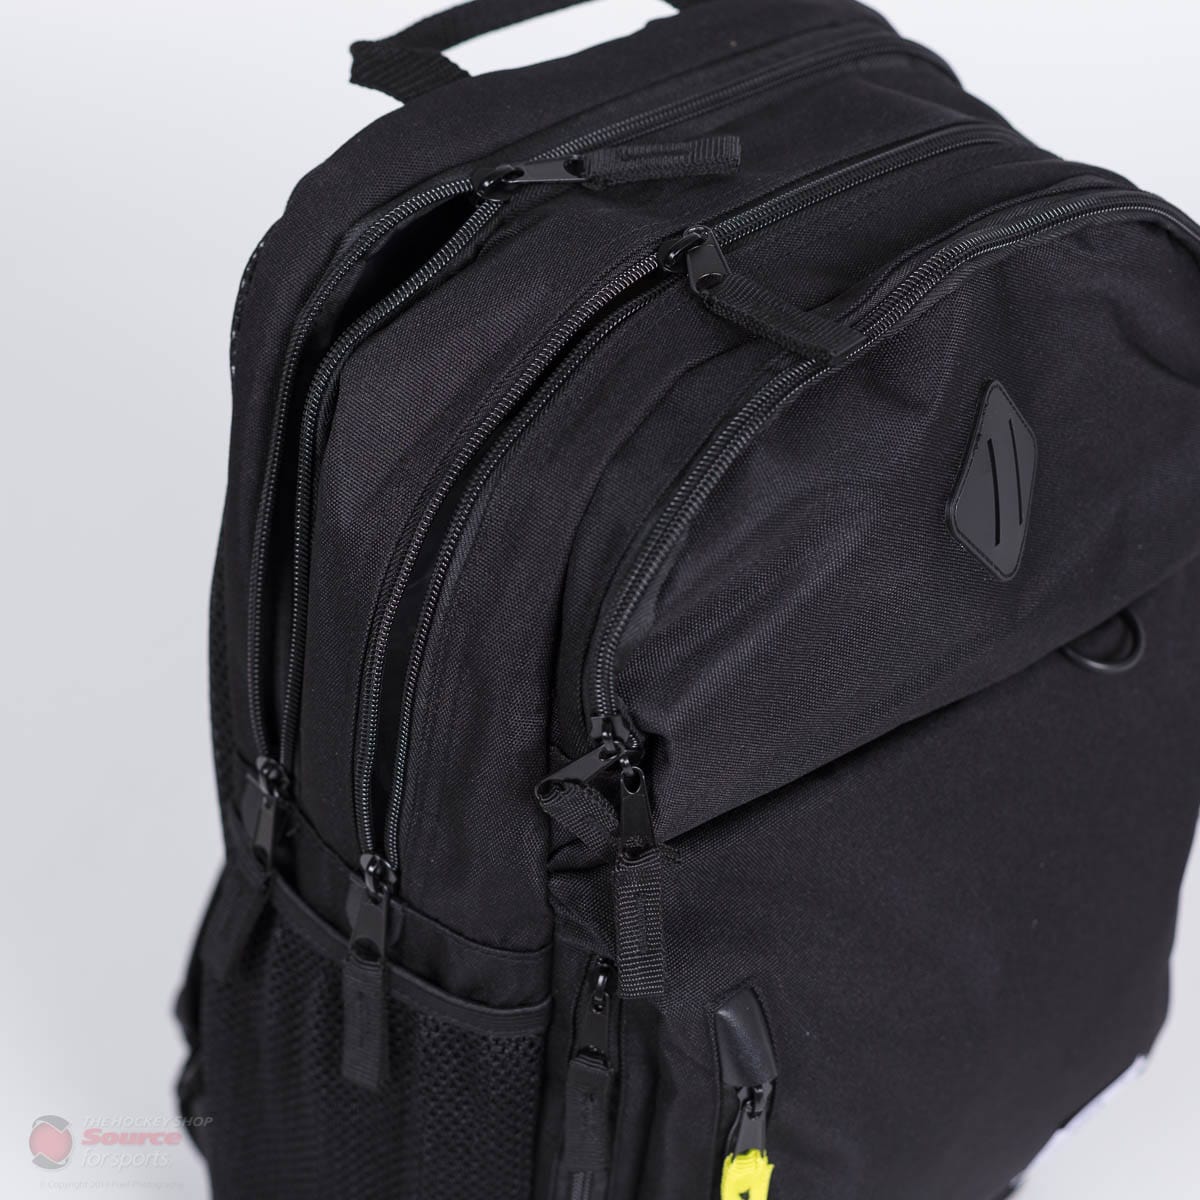 Warrior Q10 Backpack